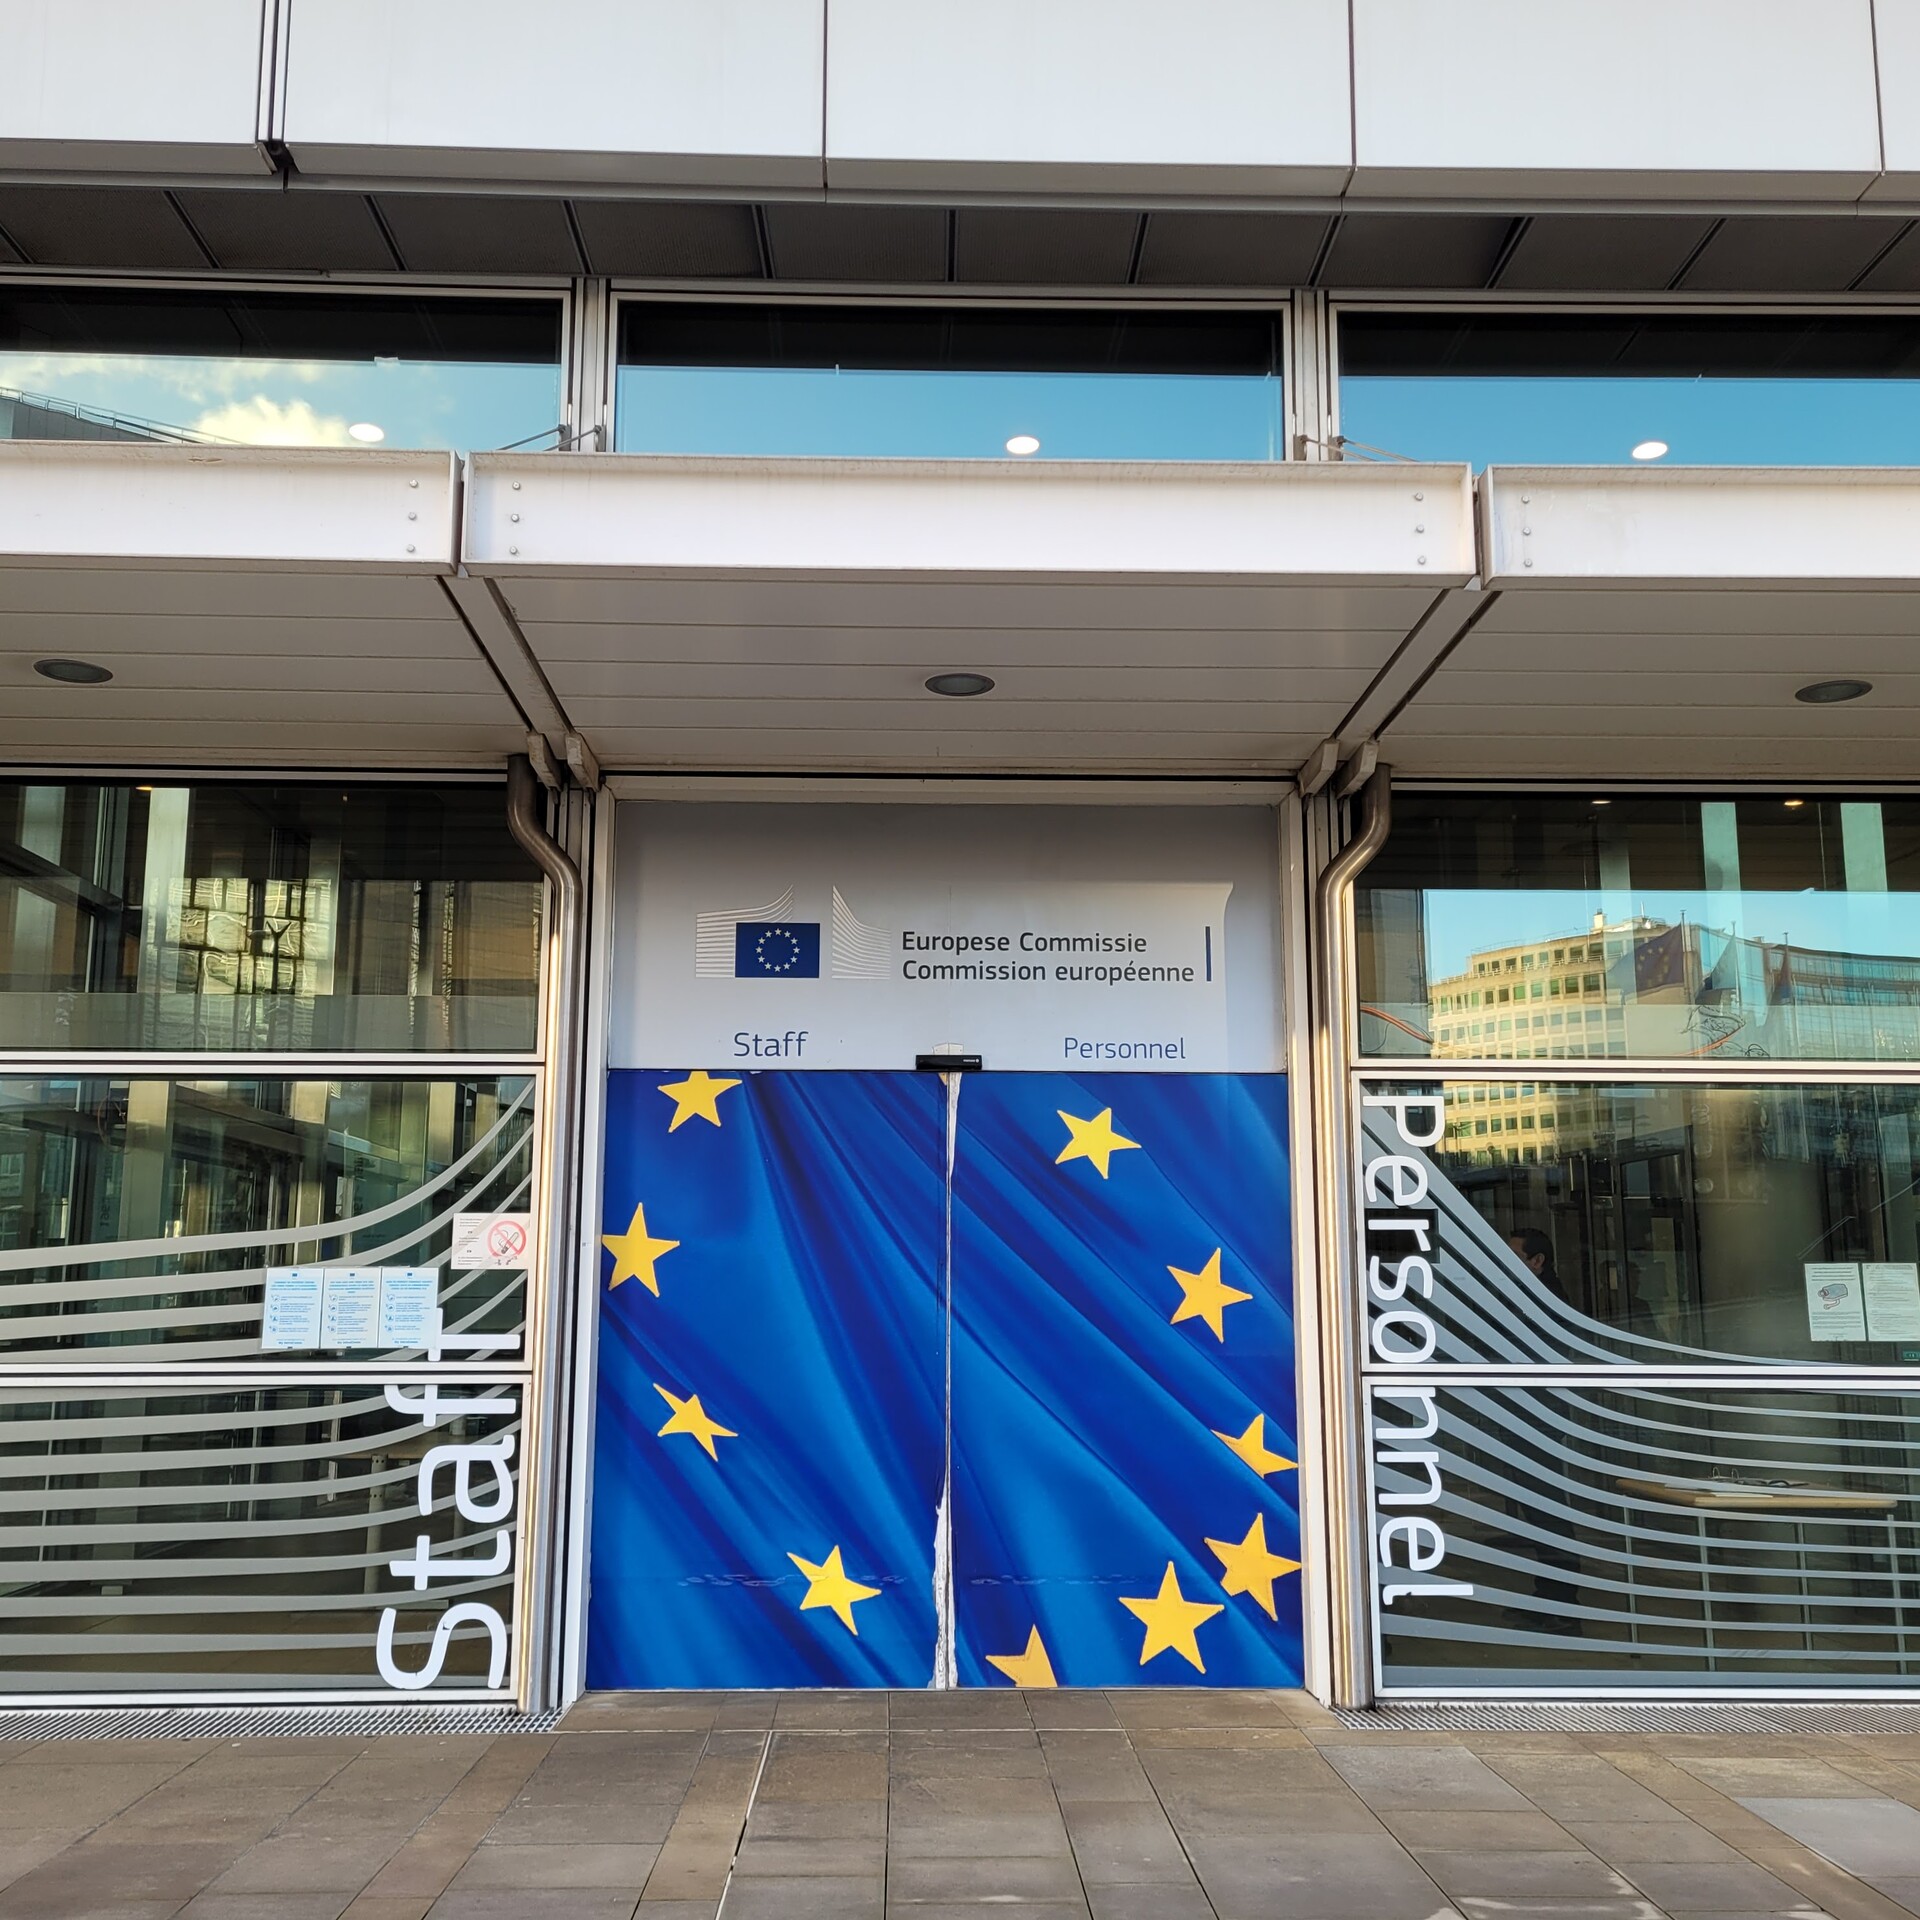 Eingang ins EU-Parlament, der durch die EU-Fahne verhängt ist. Links steht "Staff", rechts "Personnel" 